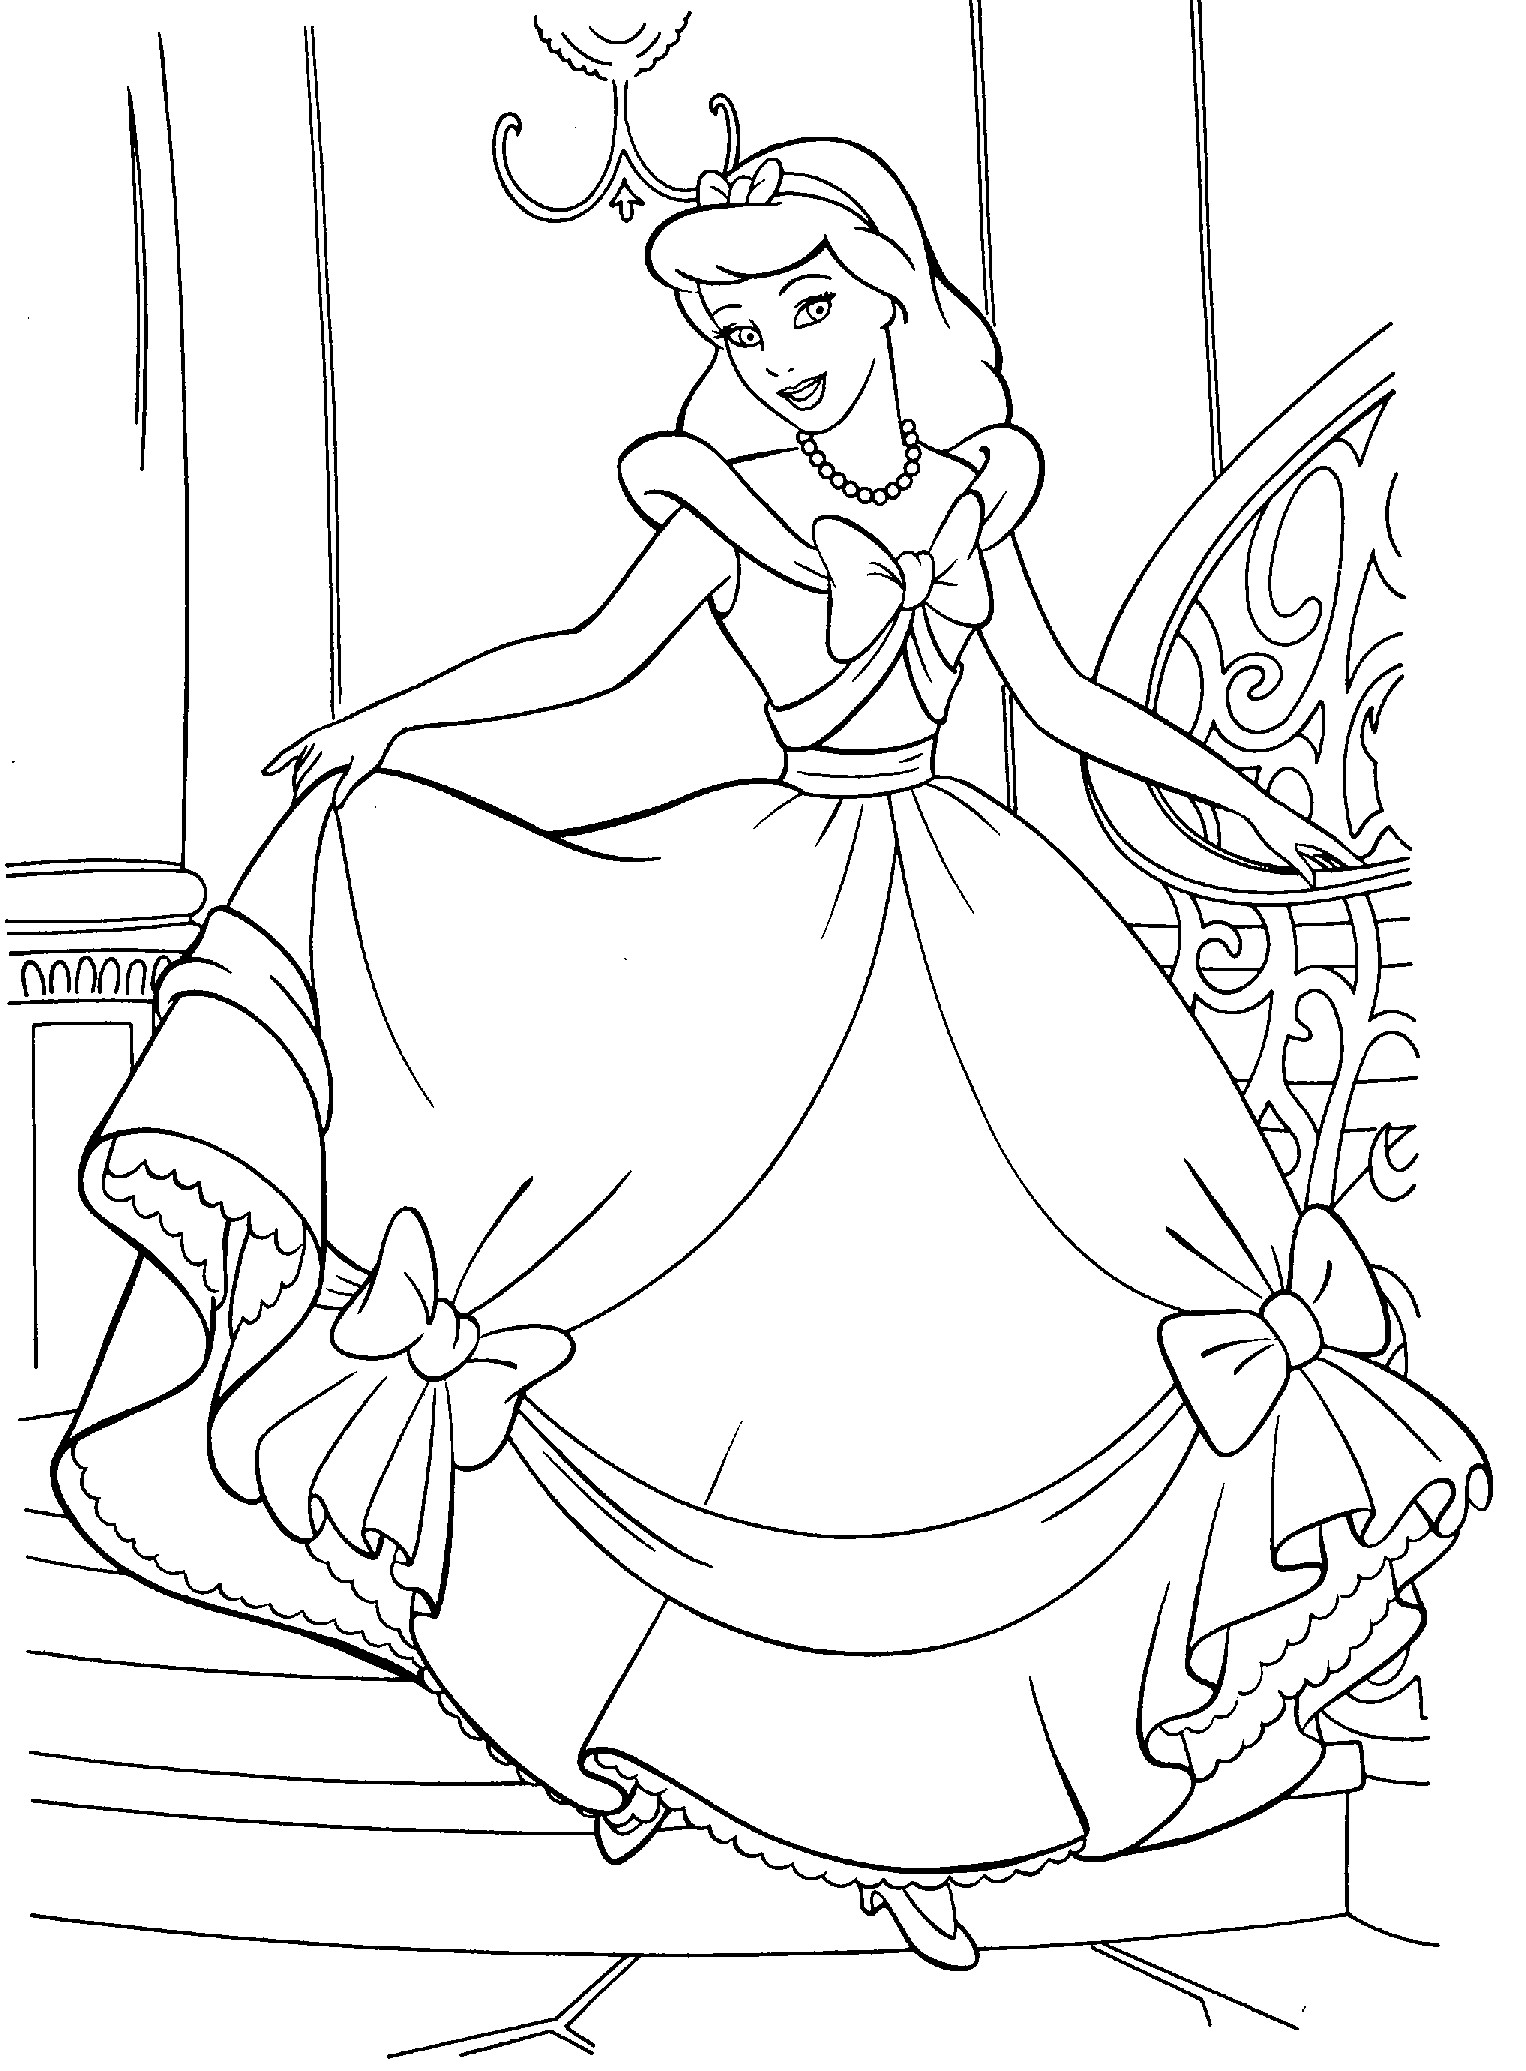 Cinderella Coloring Sheet
 Free Printable Cinderella Activity Sheets and Coloring